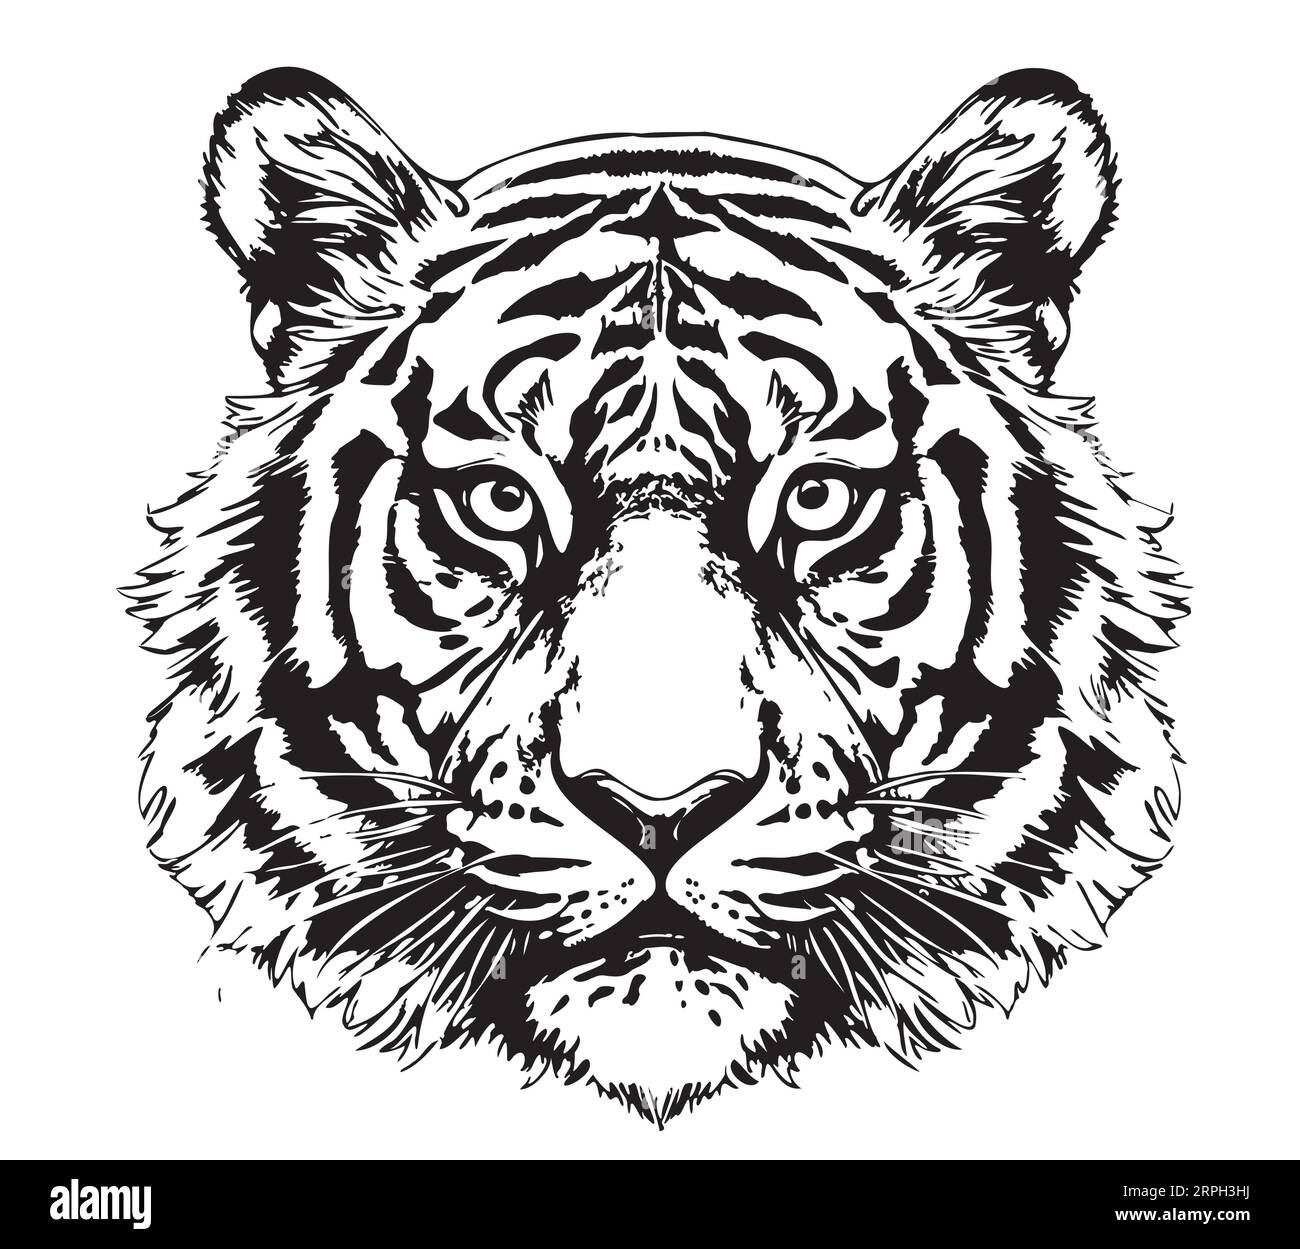 Tiger face hand drawn sketch Vector illustration Wild animals Stock ...